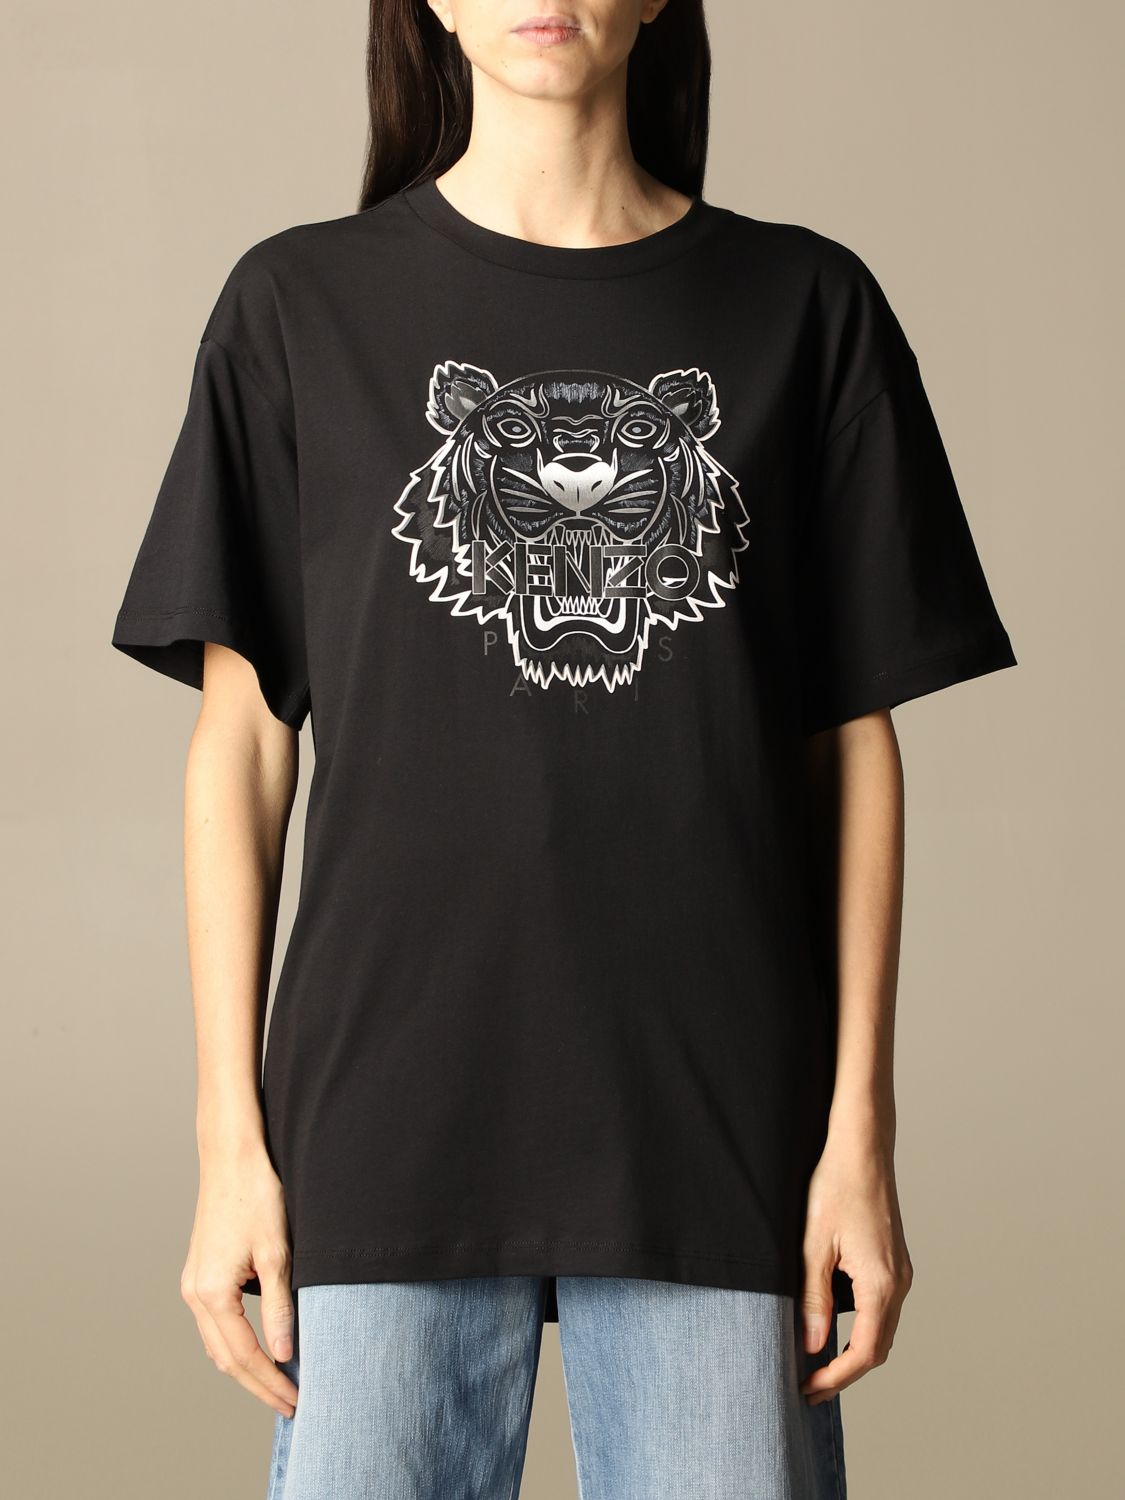 kenzo t shirt black tiger